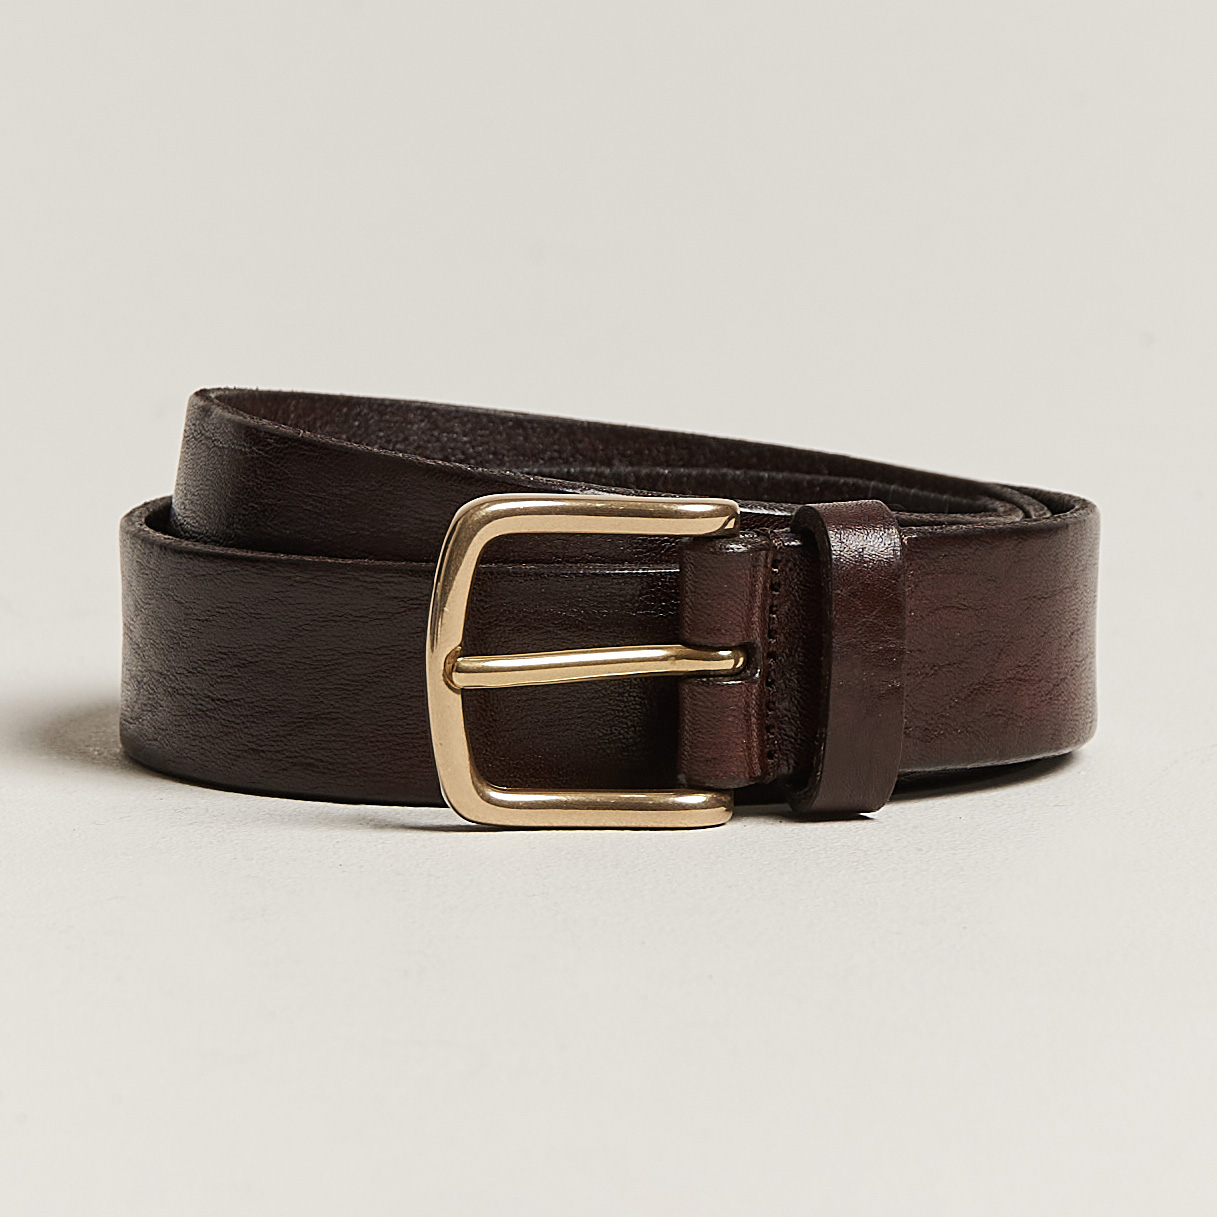 Anderson's Leather Belt 3 cm Dark Brown at CareOfCarl.com